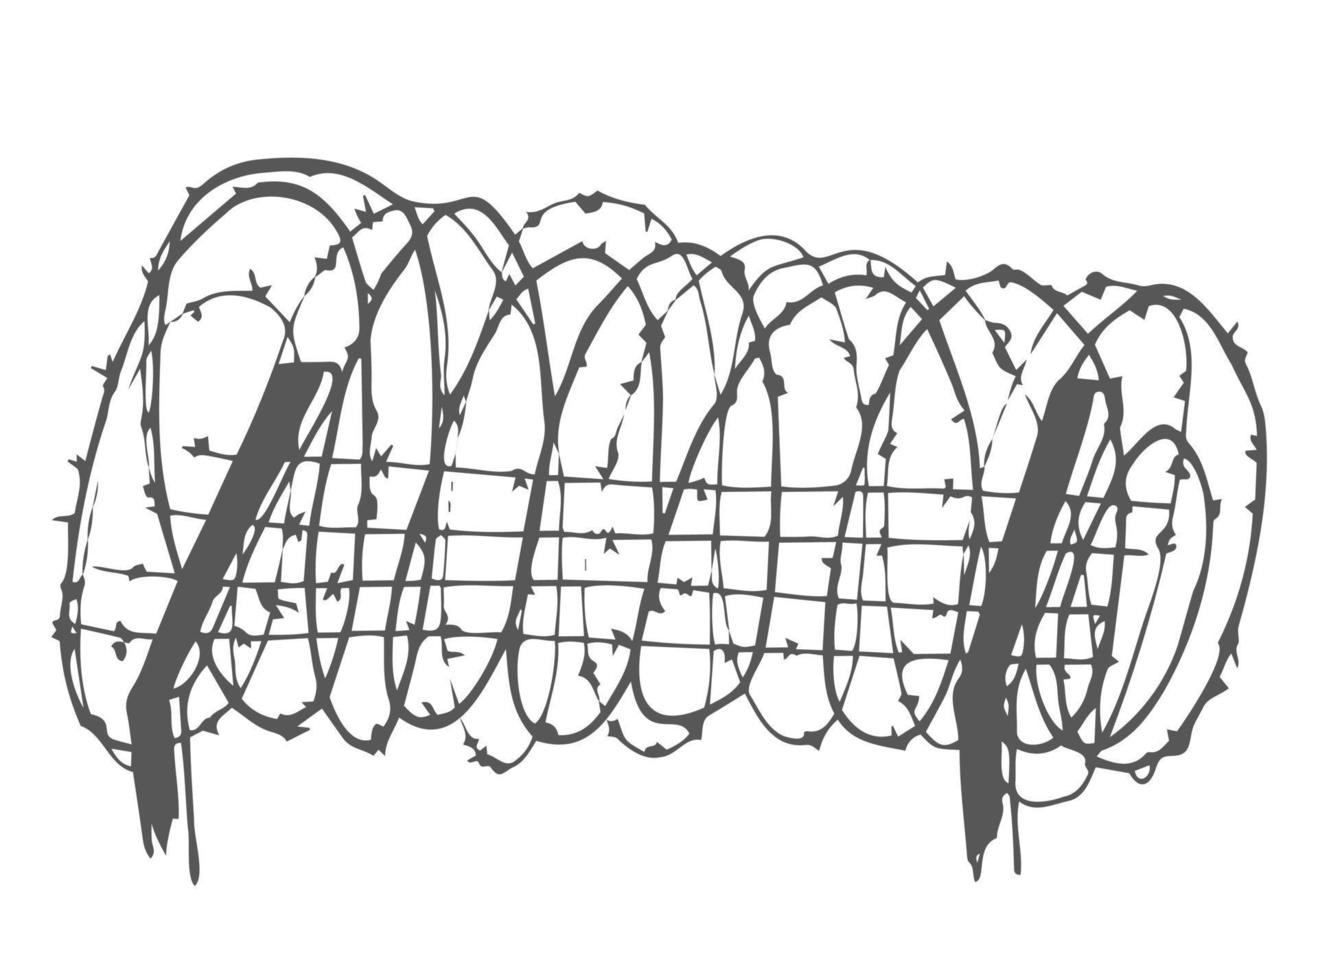 metal acero mordaz espiral cable con espinas o Picos realista vector ilustración aislado en transparente antecedentes con sombra. Esgrima o barrera garabatear elemento